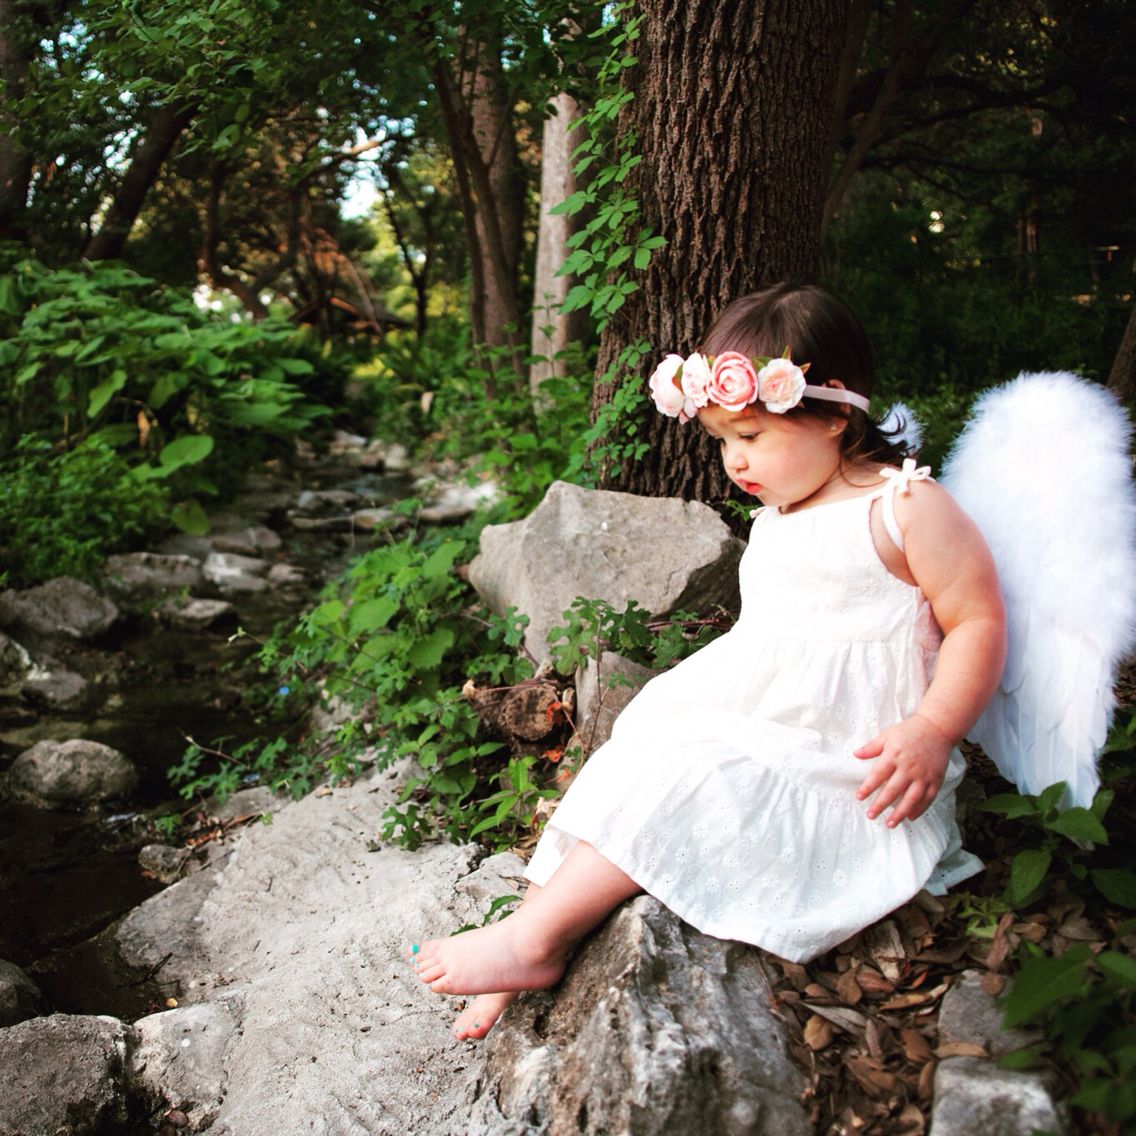 A serene little girl wearing angel wings perches on a rock